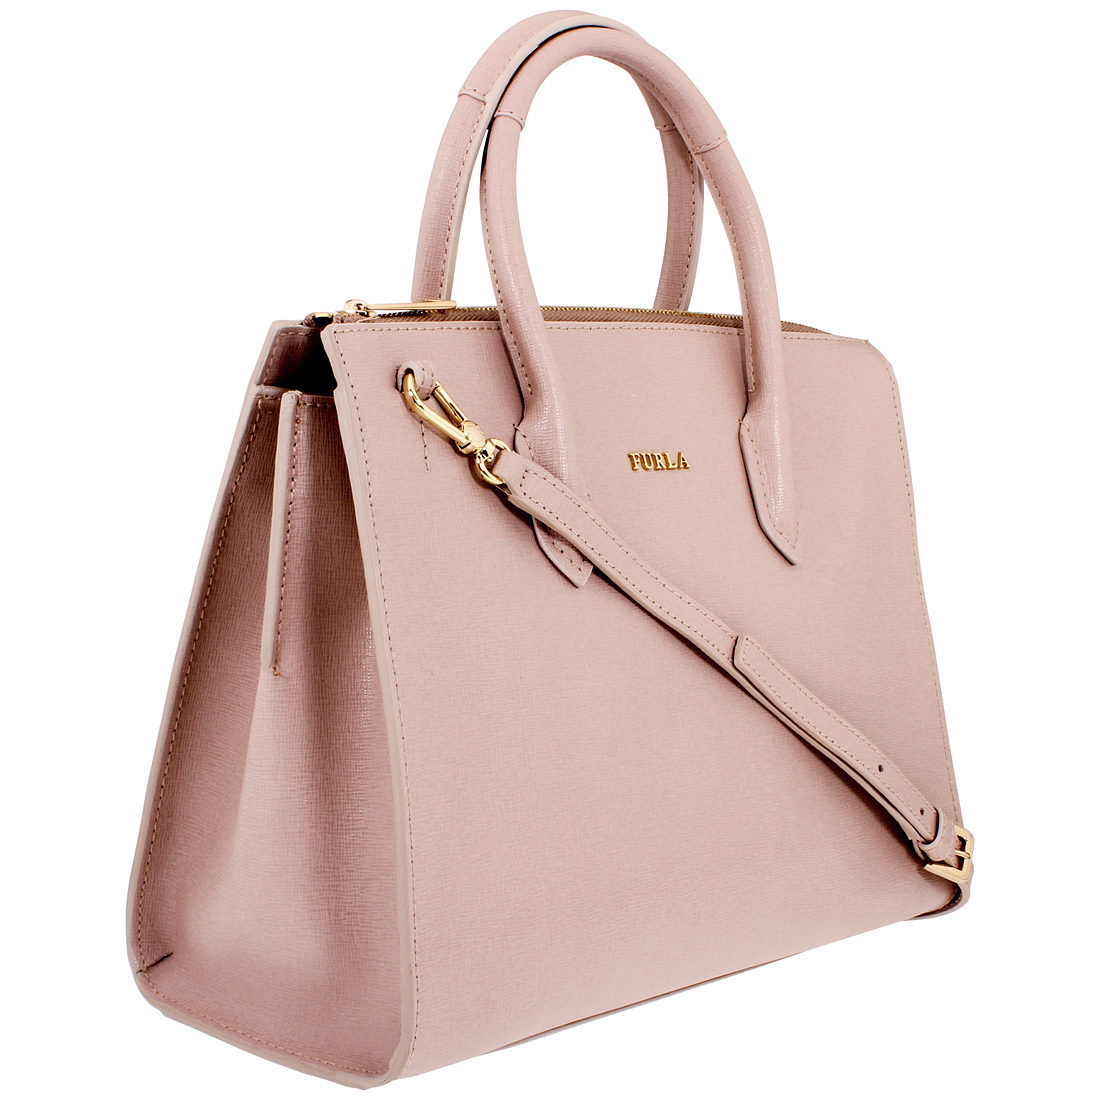 Furla Pin Ladies Medium Pink Leather Satchel Bag 994190 | eBay